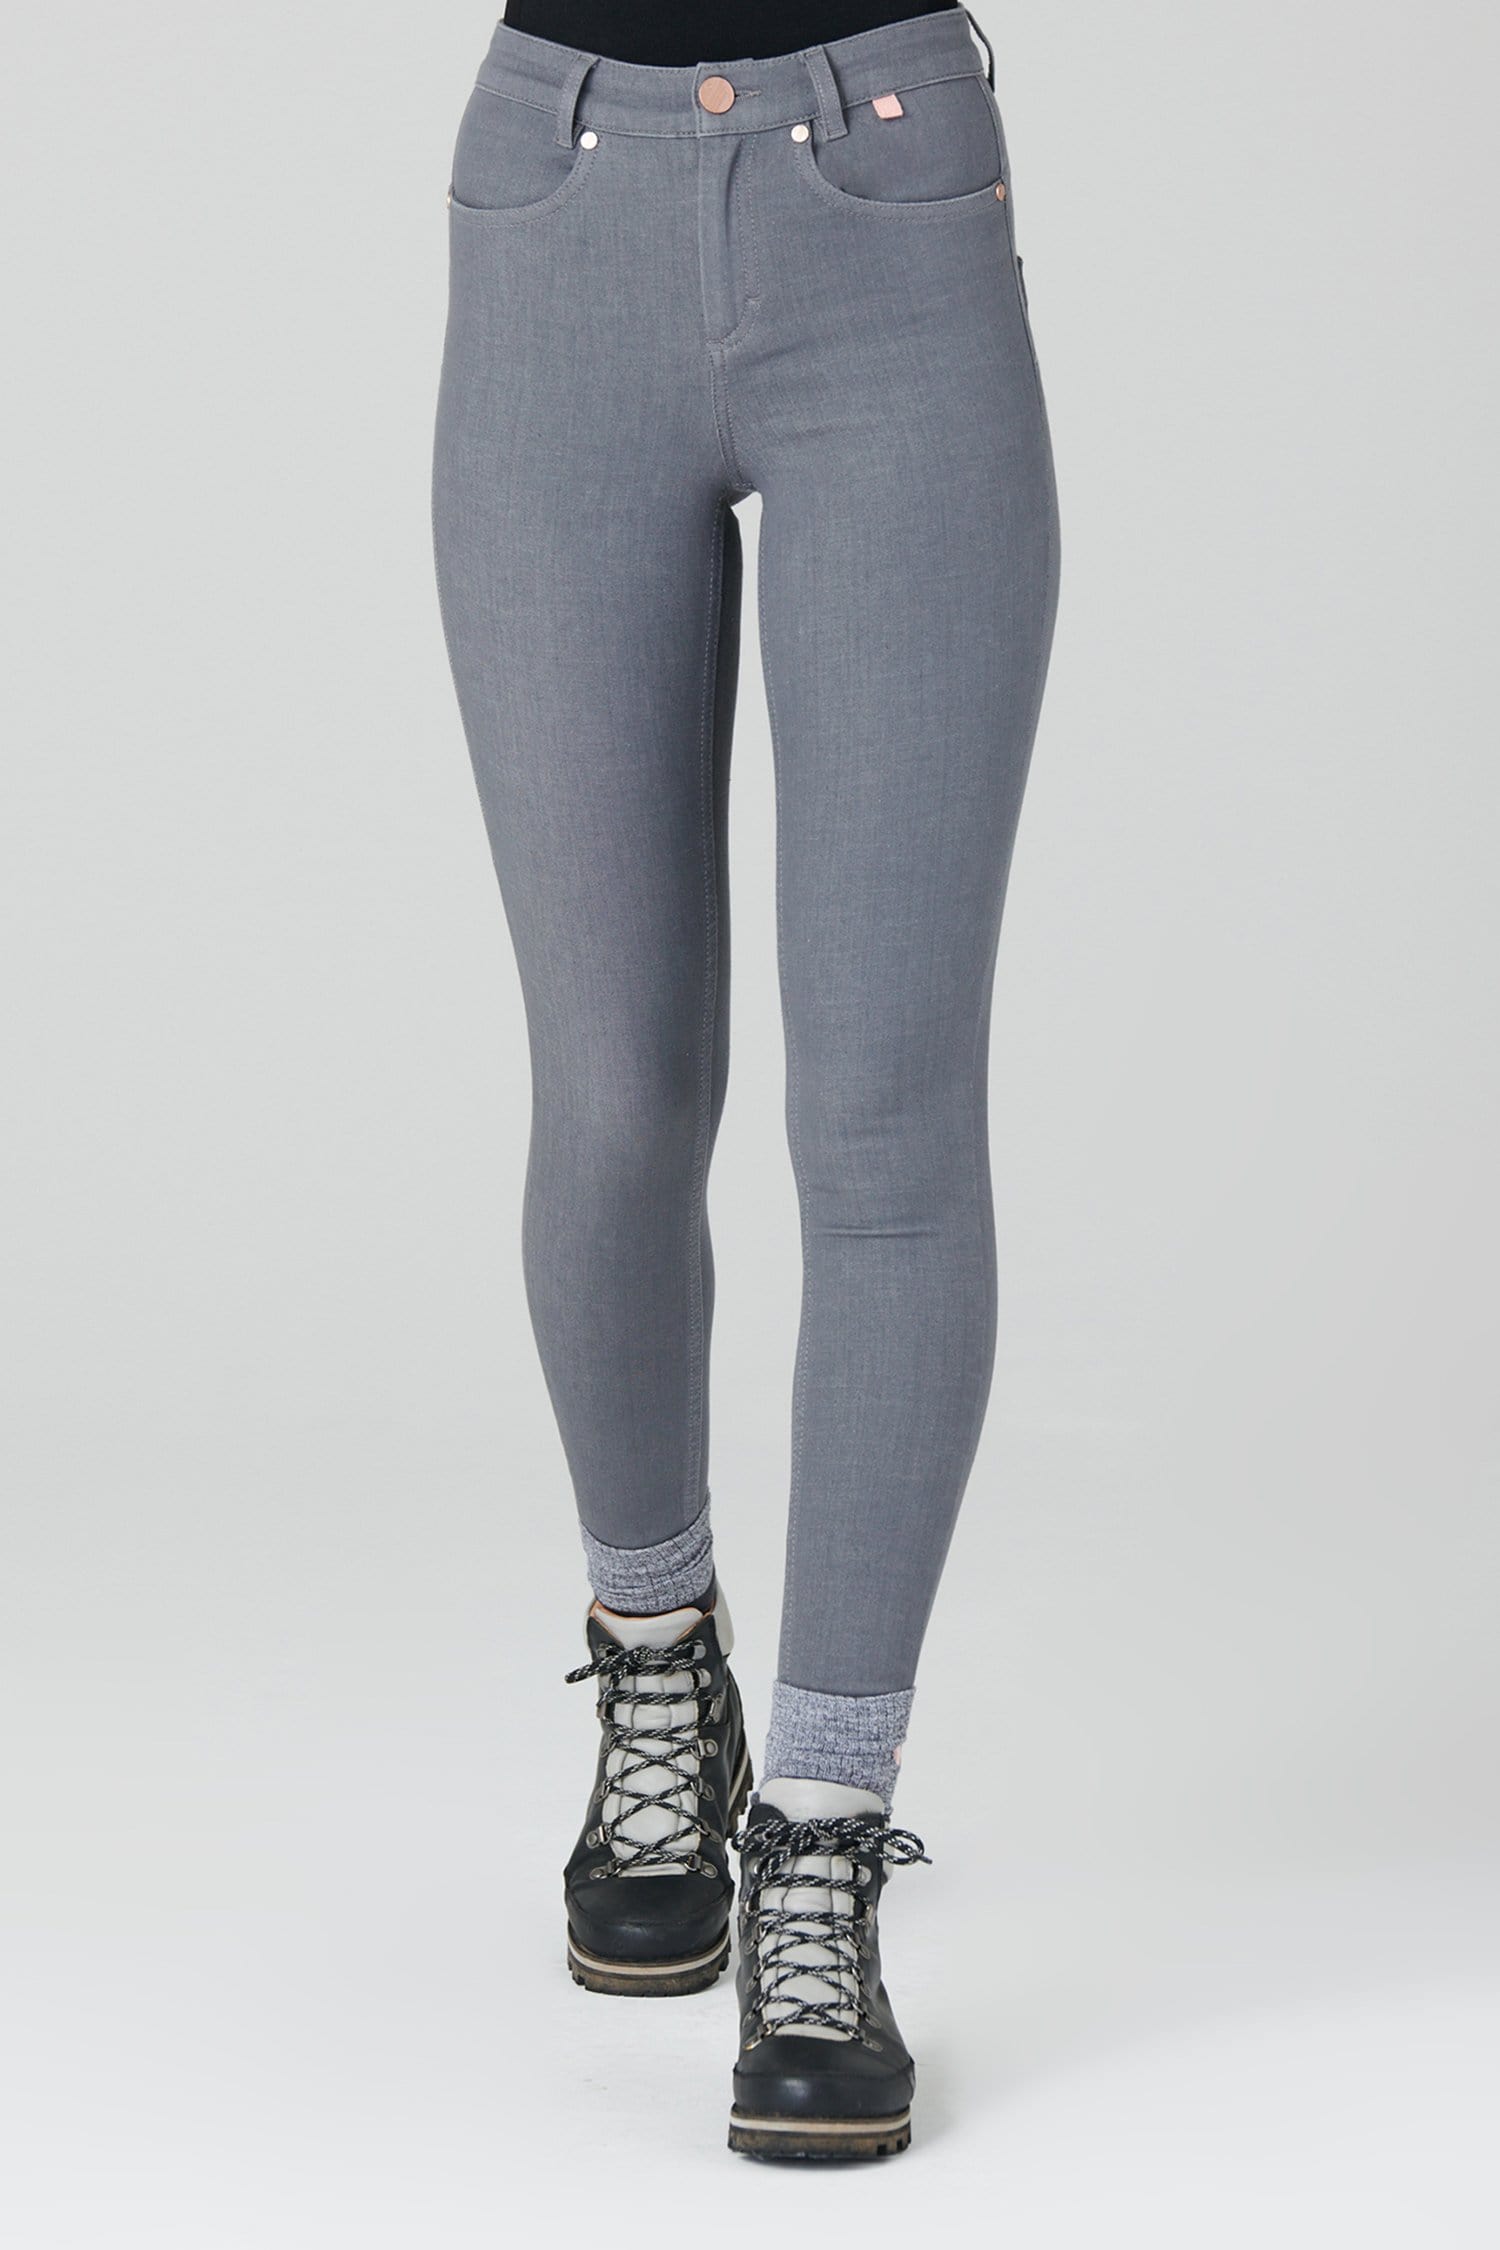 The Skinny Outdoor Jeans - Grey Denim - 26p / Uk8 - Womens - Acai Outdoorwear